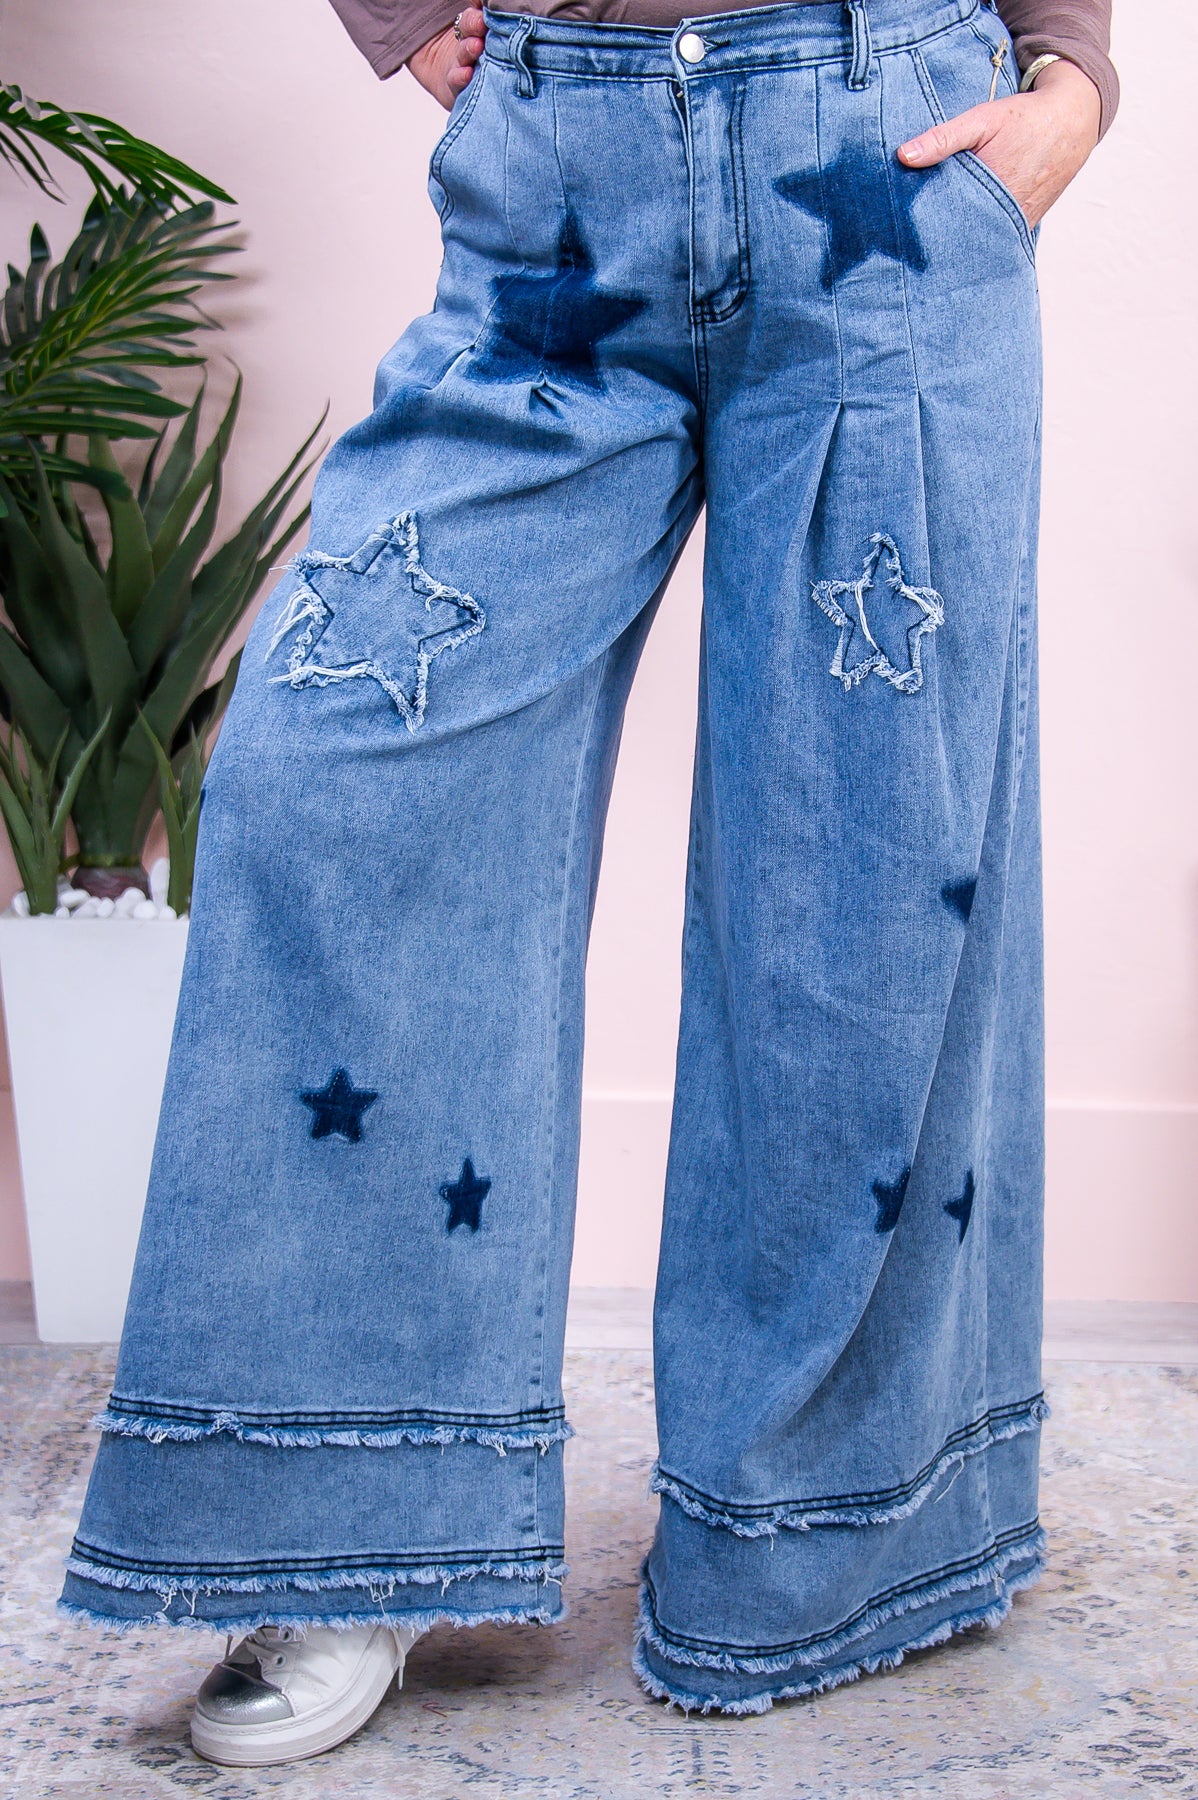 Stacy Light Denim/Dark Denim Star Jeans - K1090DN